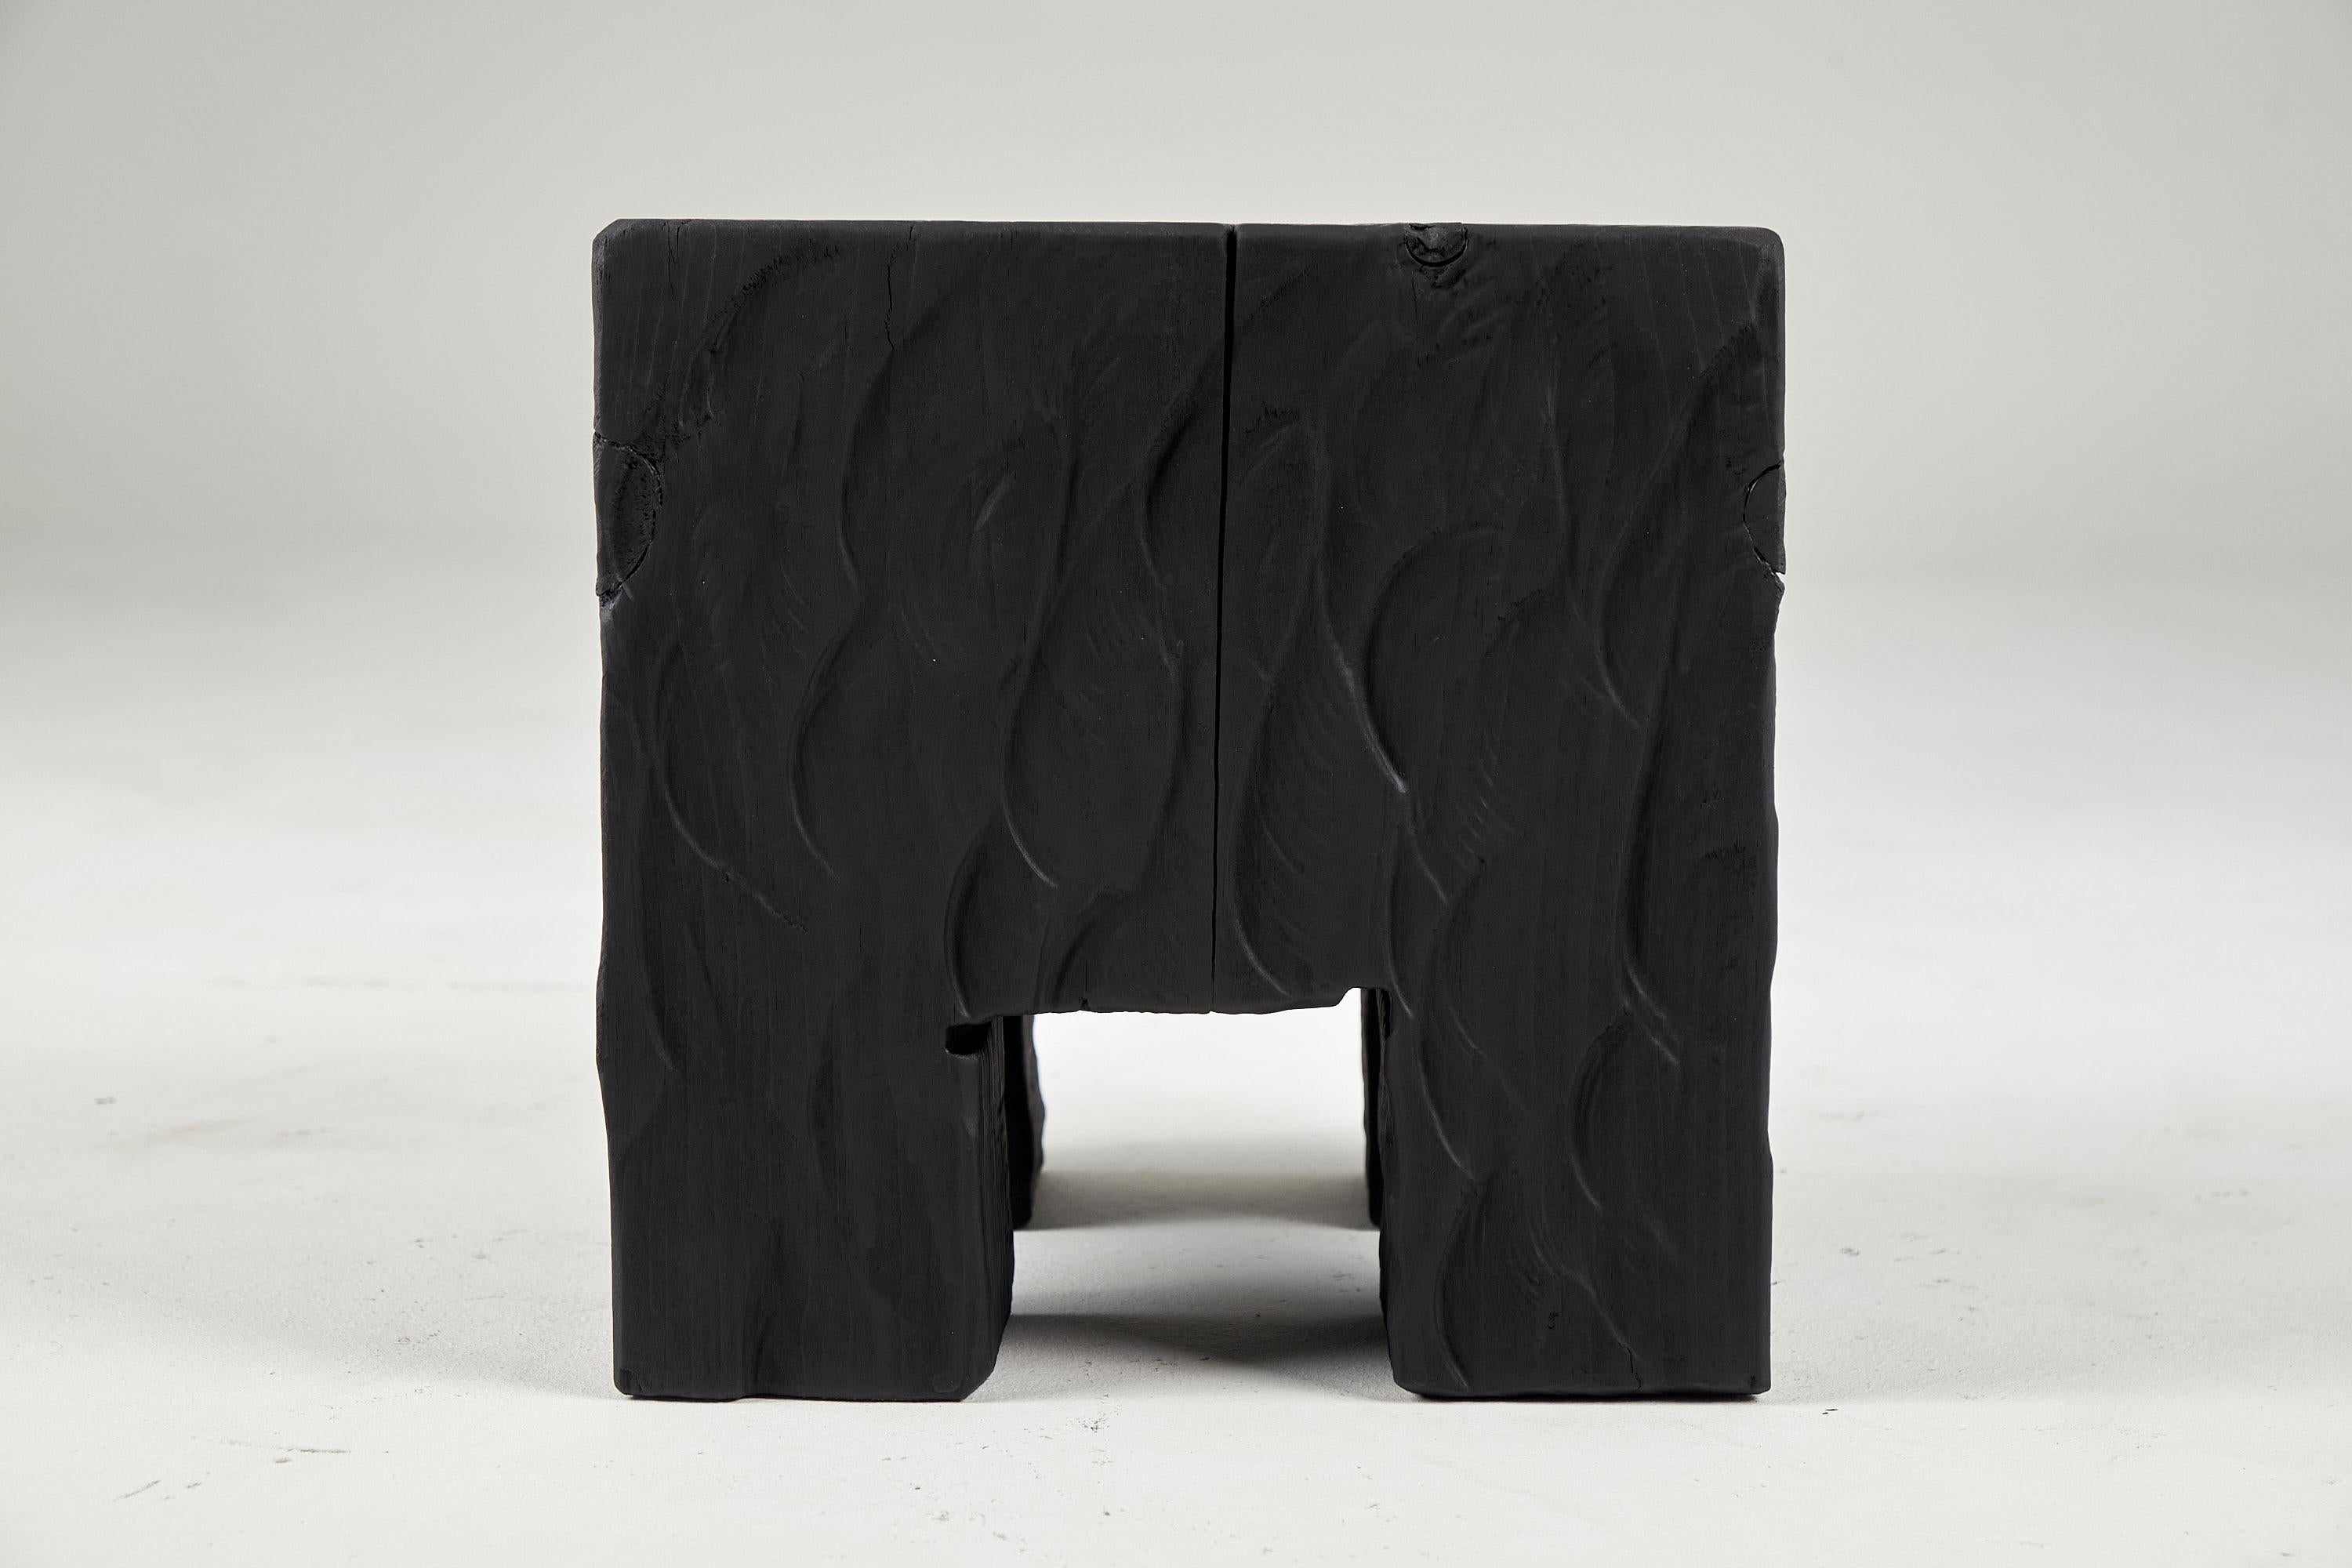 Brutalist Solid Burnt Wood, Side Table, Stool, Wabi Sabi, Chainsaw Carved, Handmade For Sale